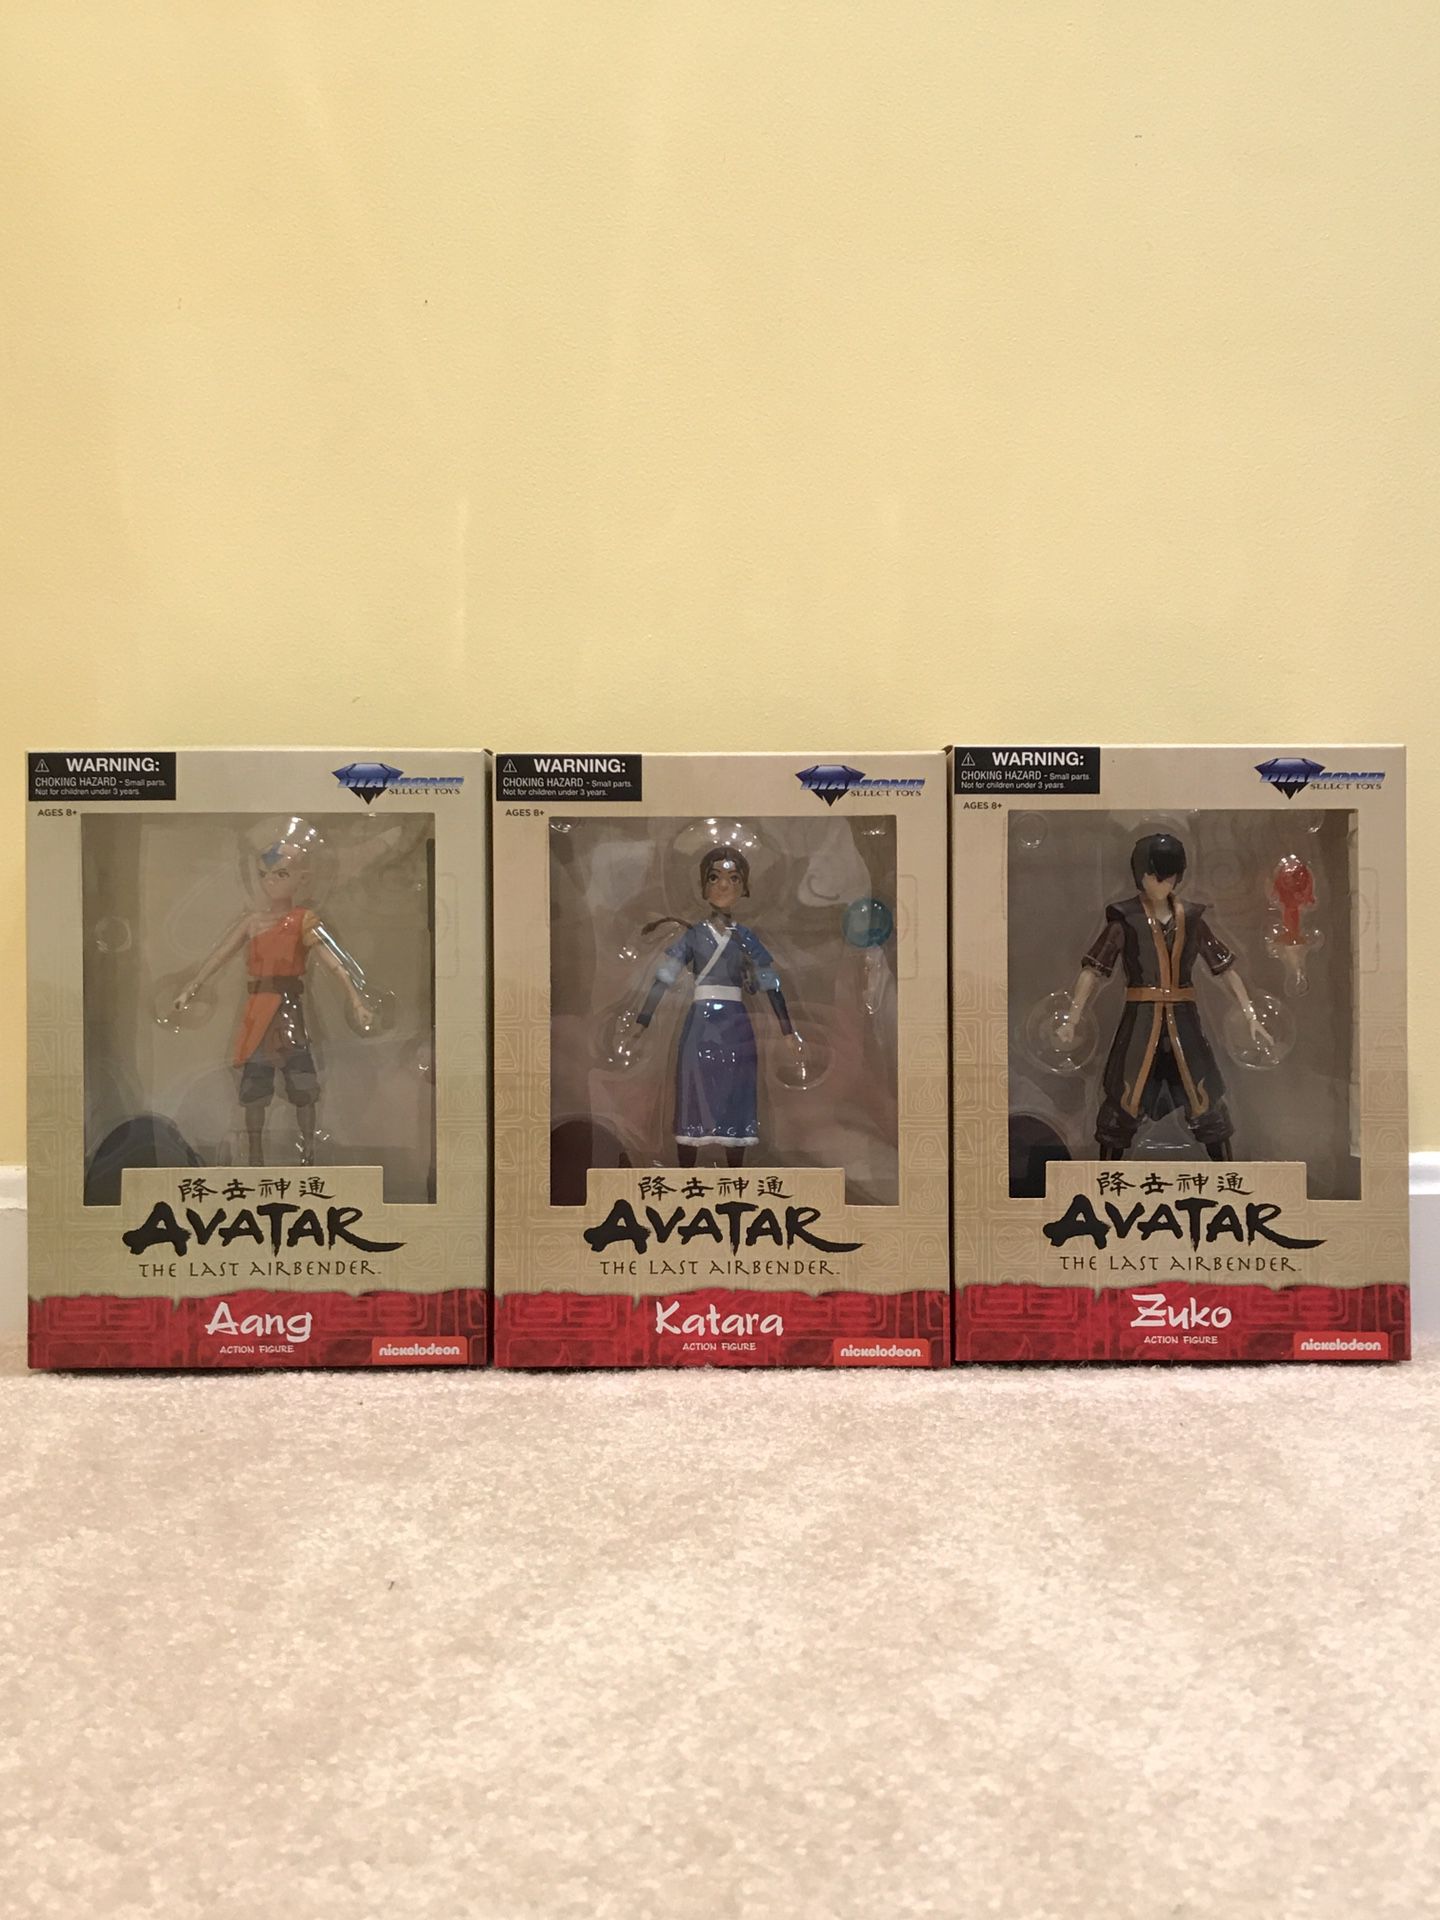 Diamond Select (2019) Avatar the Last Airbender 5” Toy Figures Set of 3 - Aang, Katara and Zuko